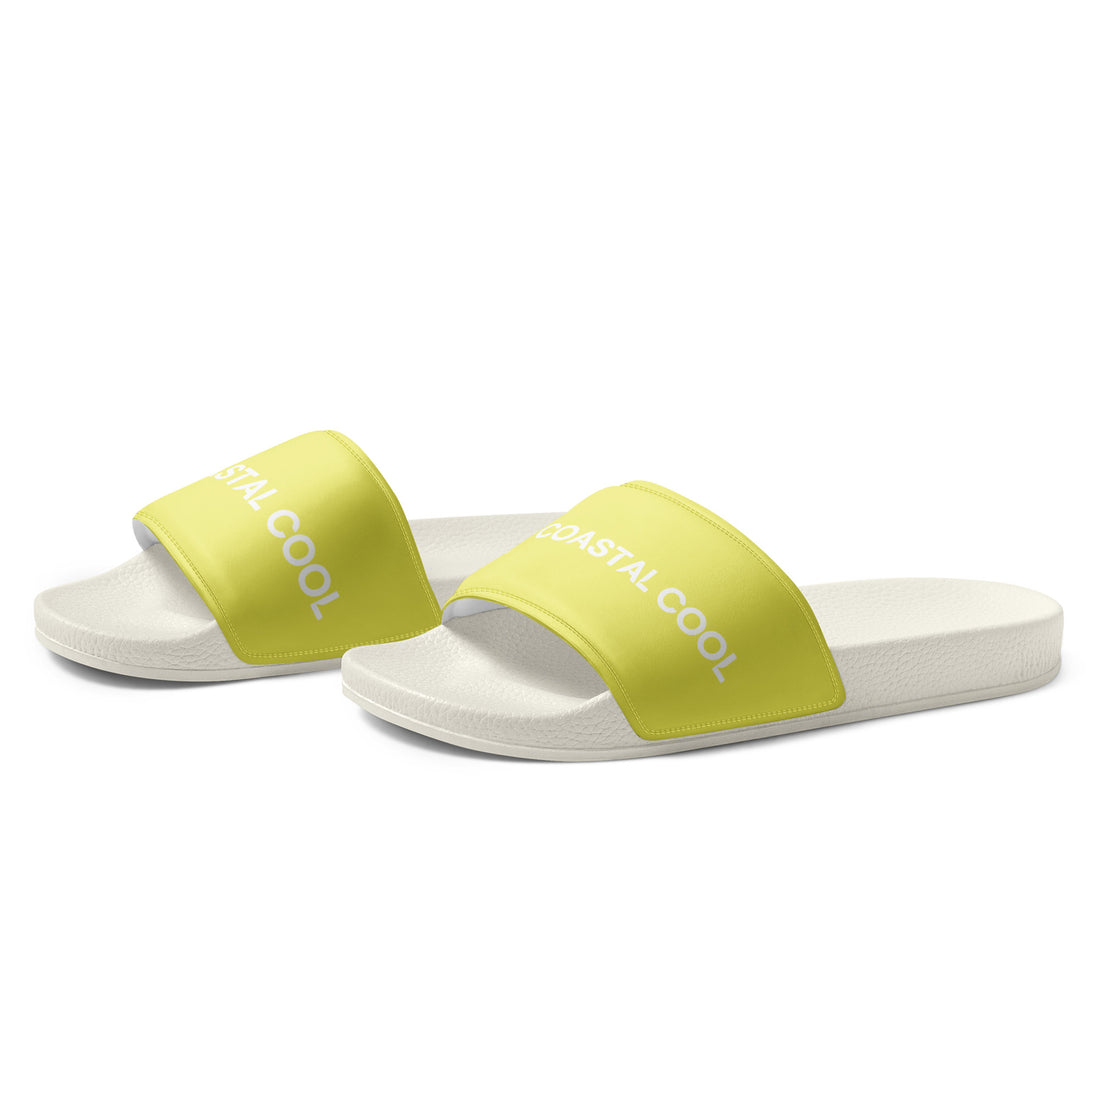 Men’s Slides - Yellow - Coastal Cool - Swimwear and Beachwear - Recycled fabrics